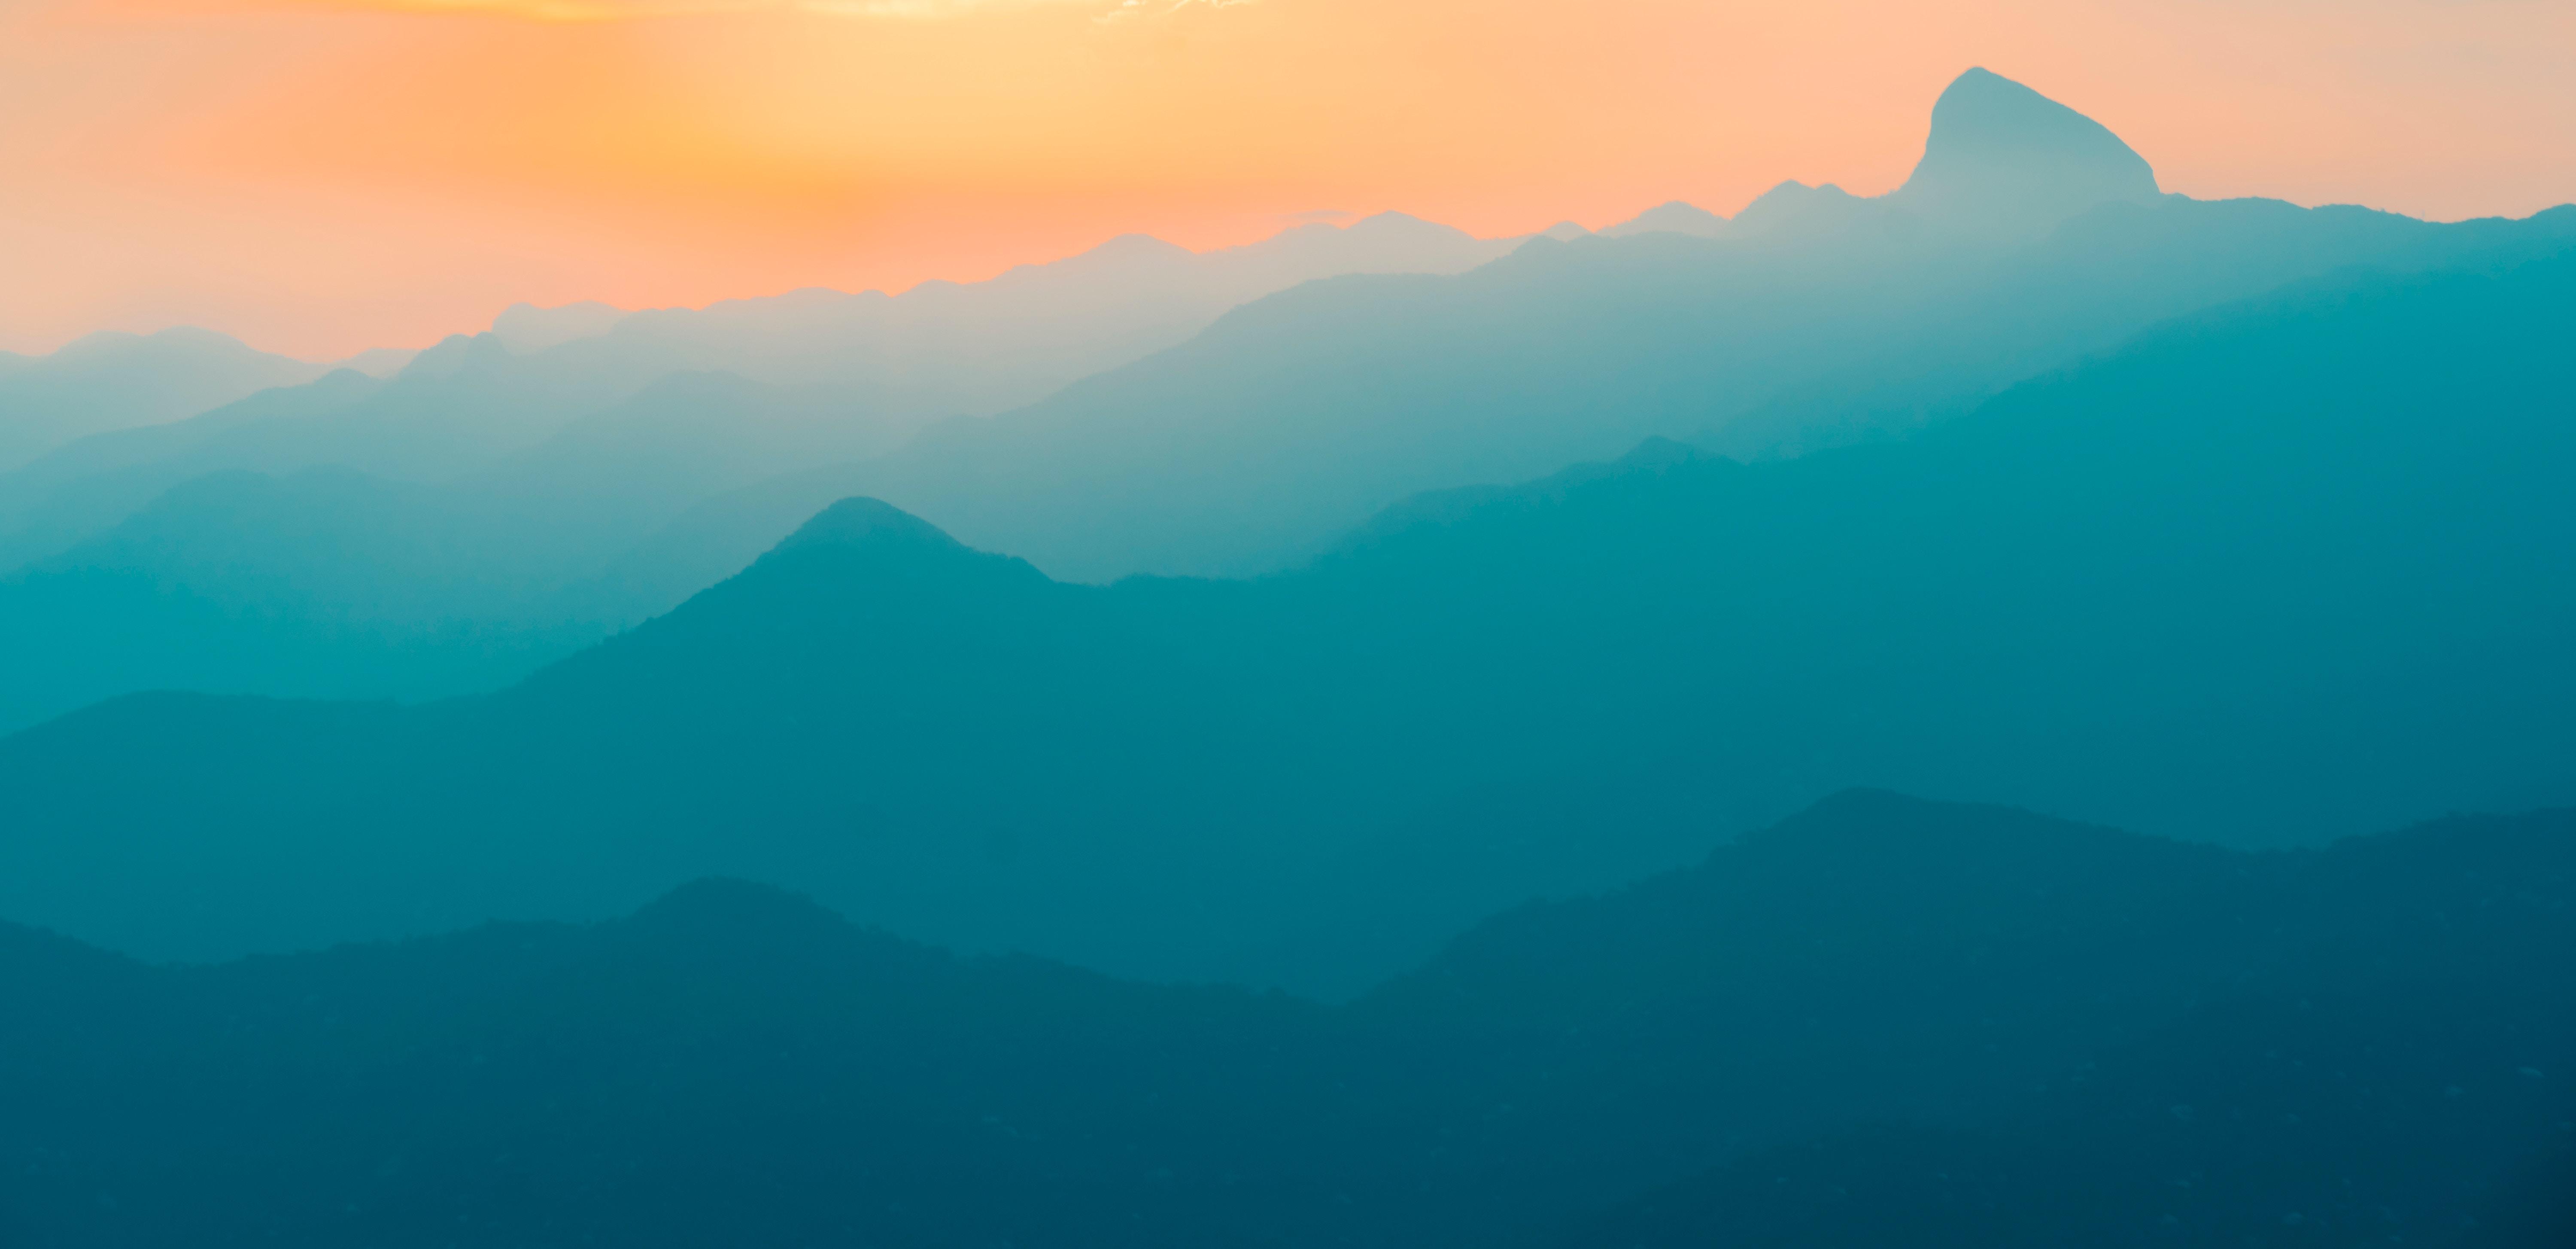 Wallpaper Mountain range, Sunset, Gradient, Turquoise, Teal, HD, 5K